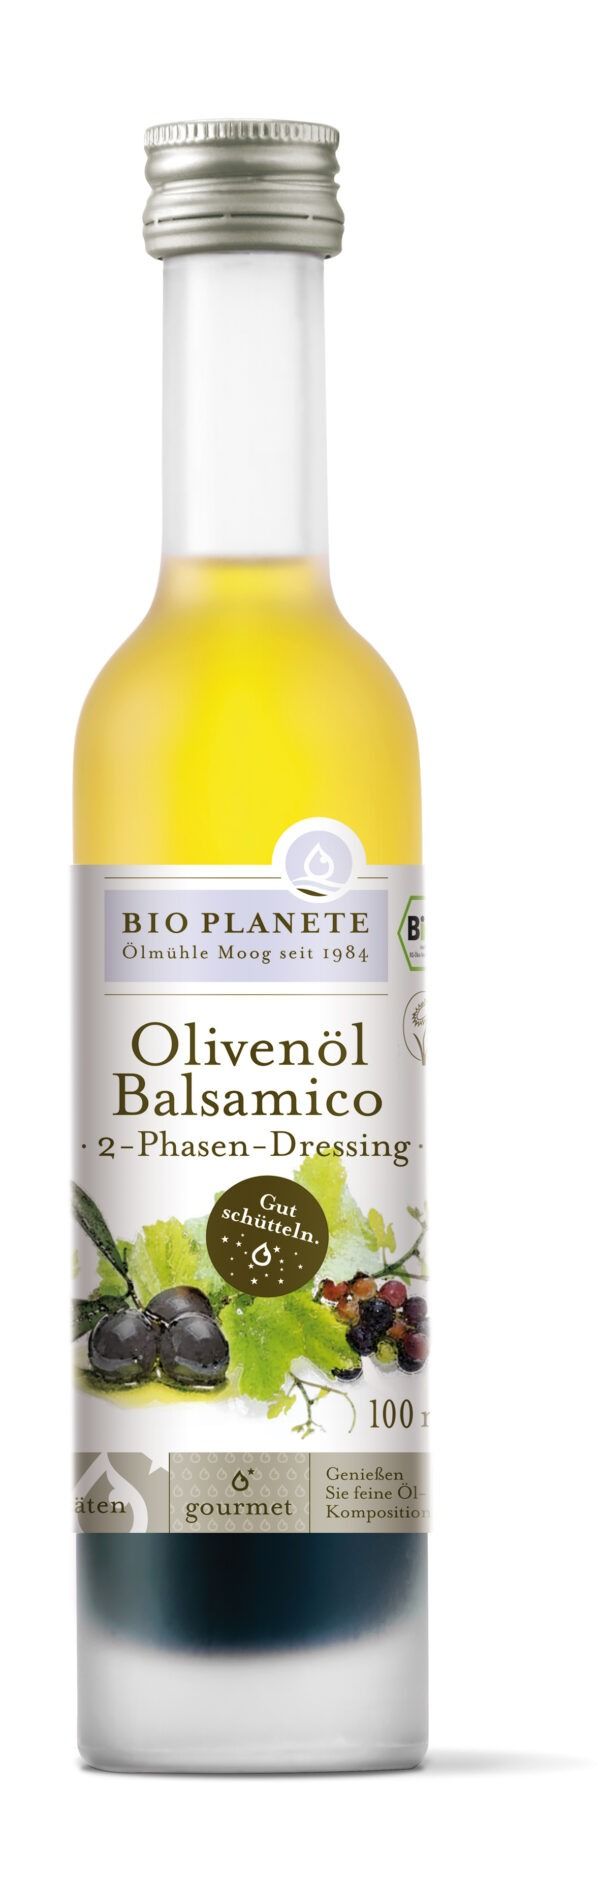 BIO PLANÈTE Olivenöl & Balsamico 2-Phasen-Dressing 0,1l